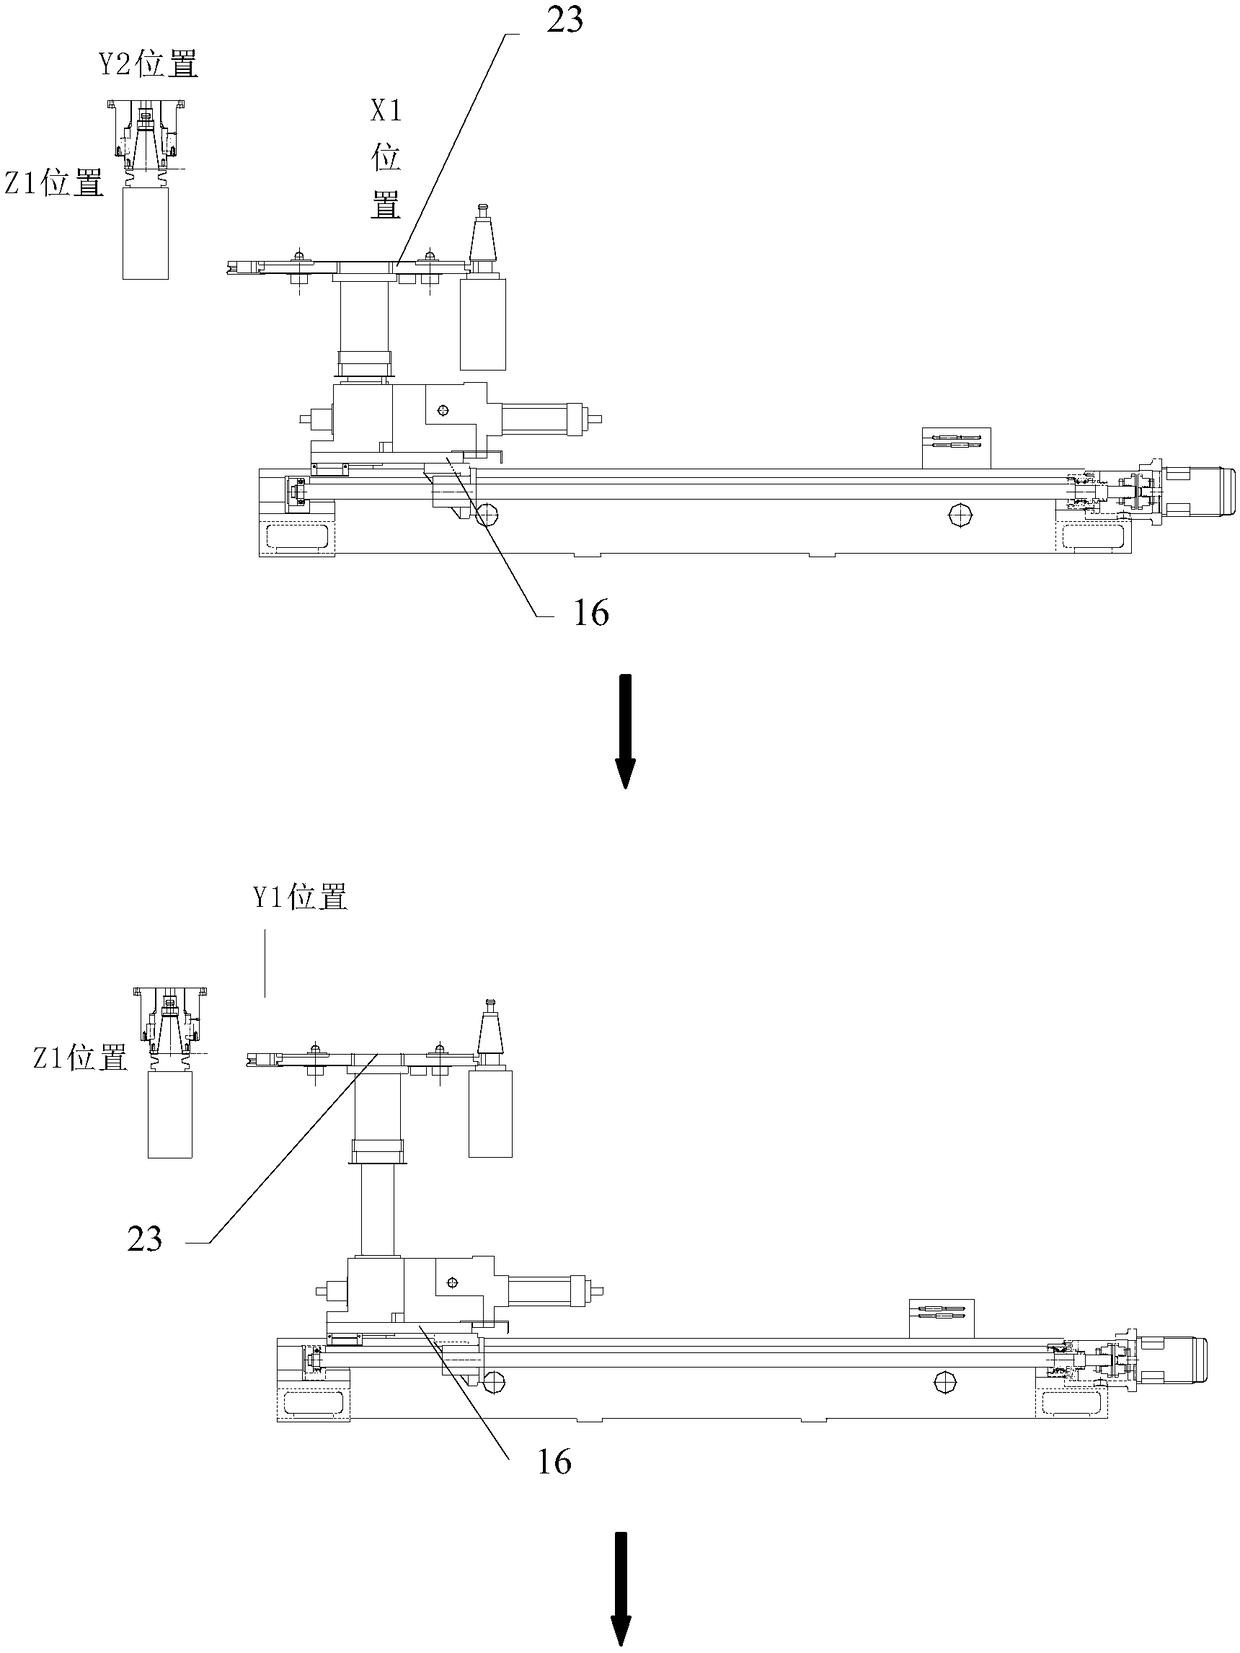 Cutter change mechanism for elevated gantry machining center